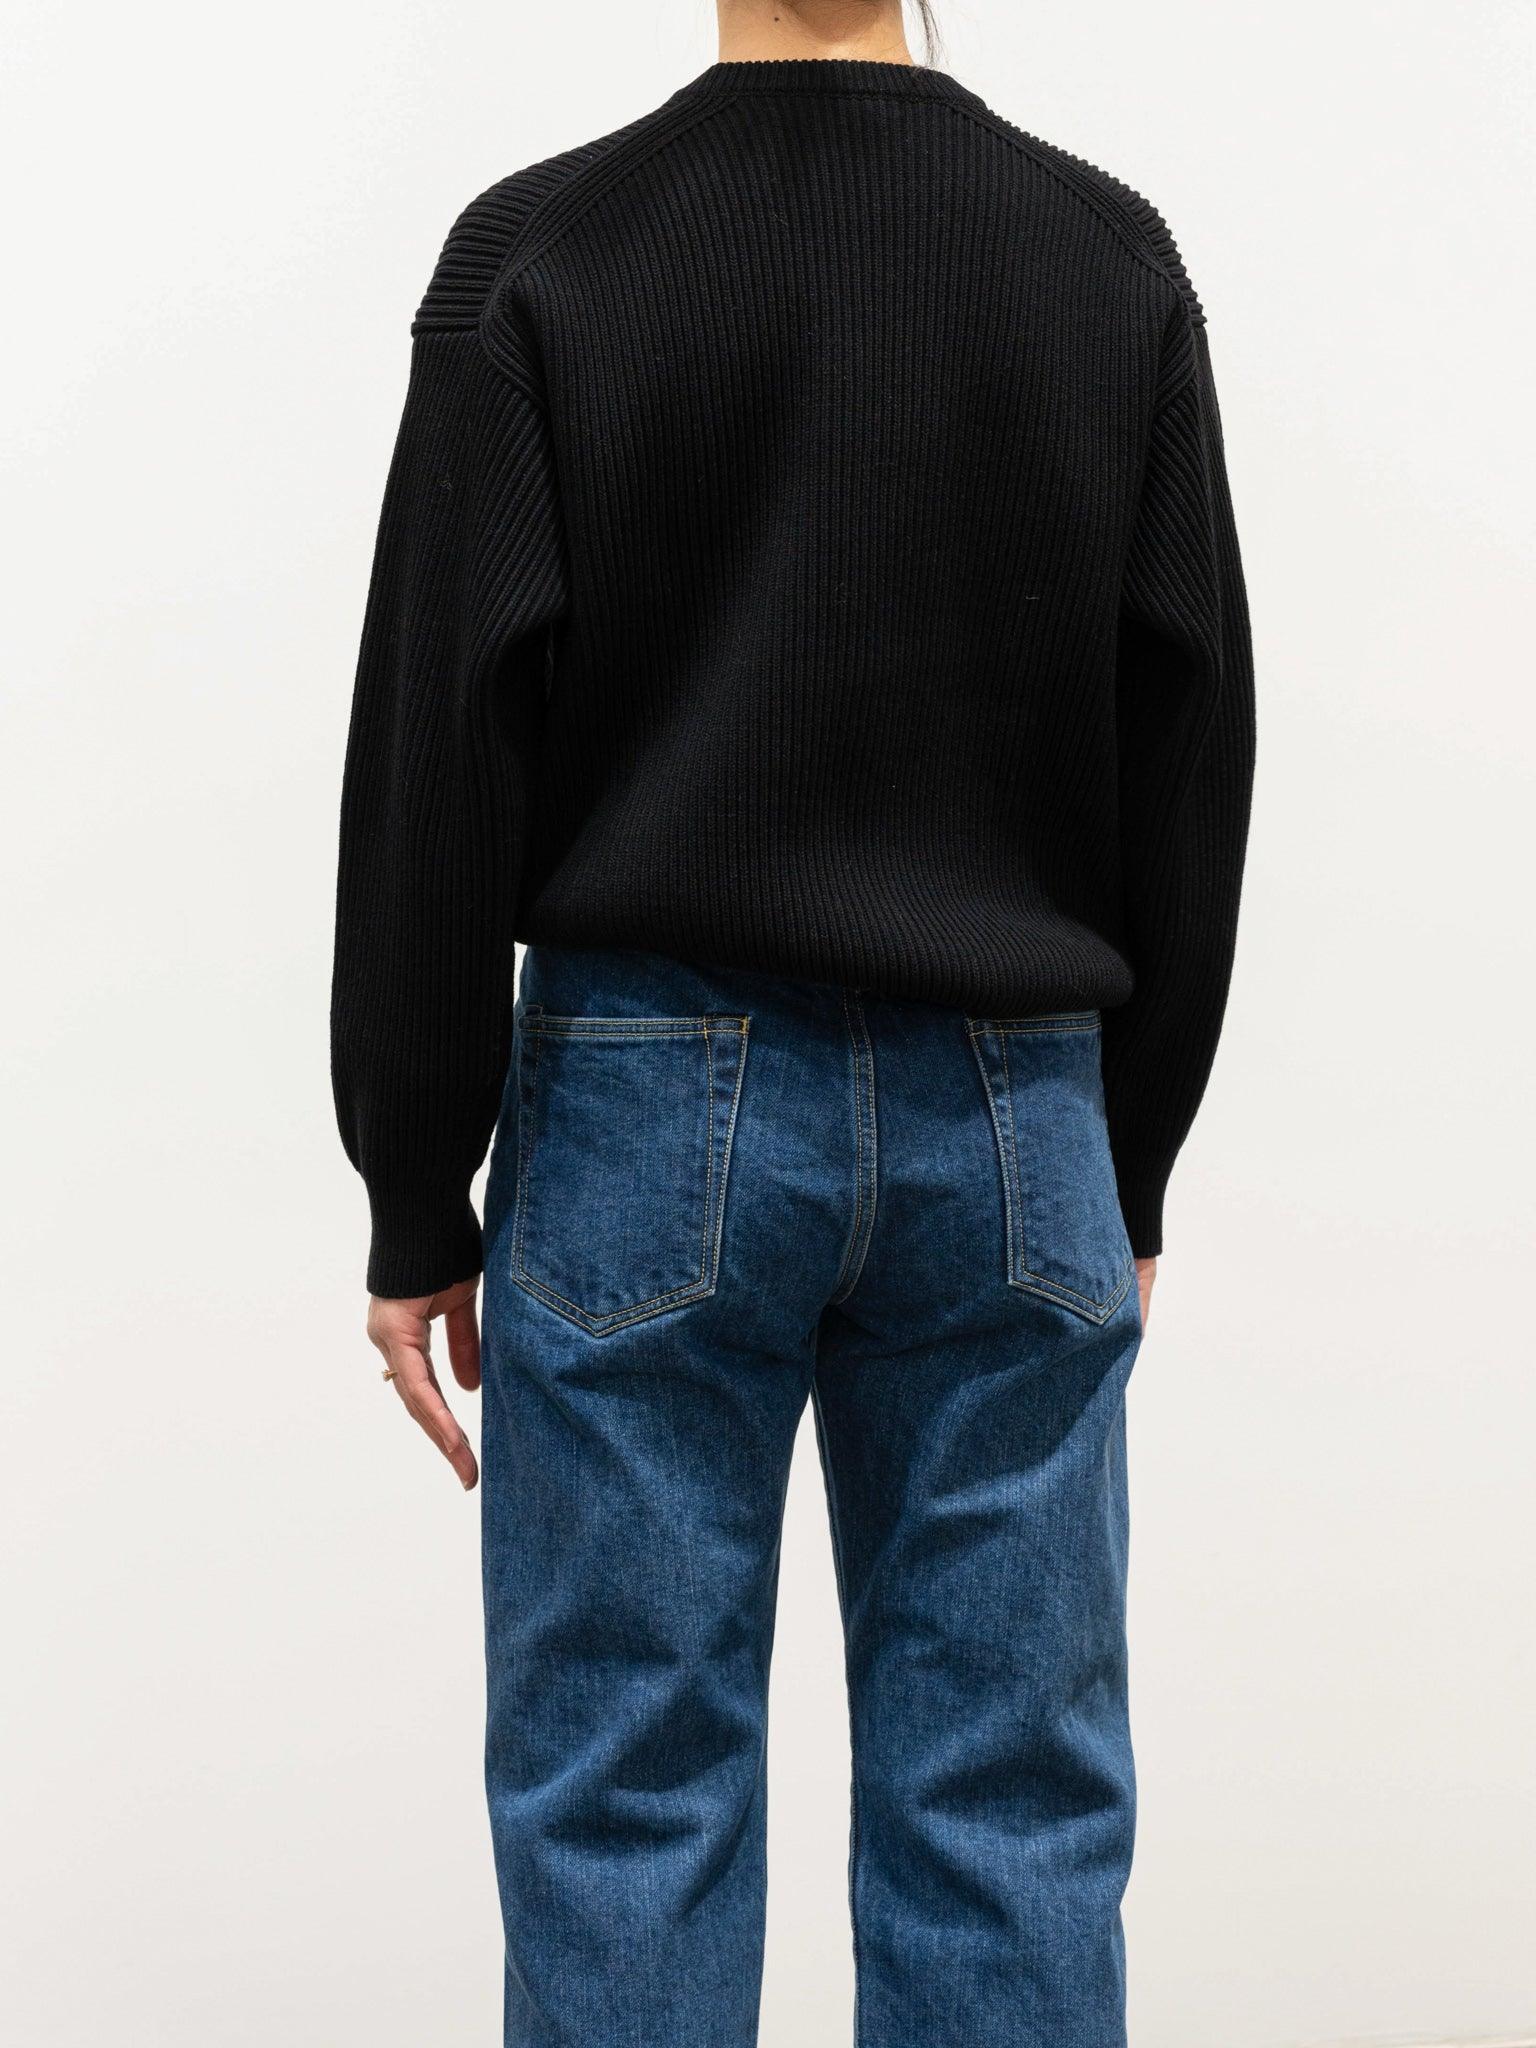 Namu Shop - Auralee Super Fine Wool Rib Knit Big Pullover - Black